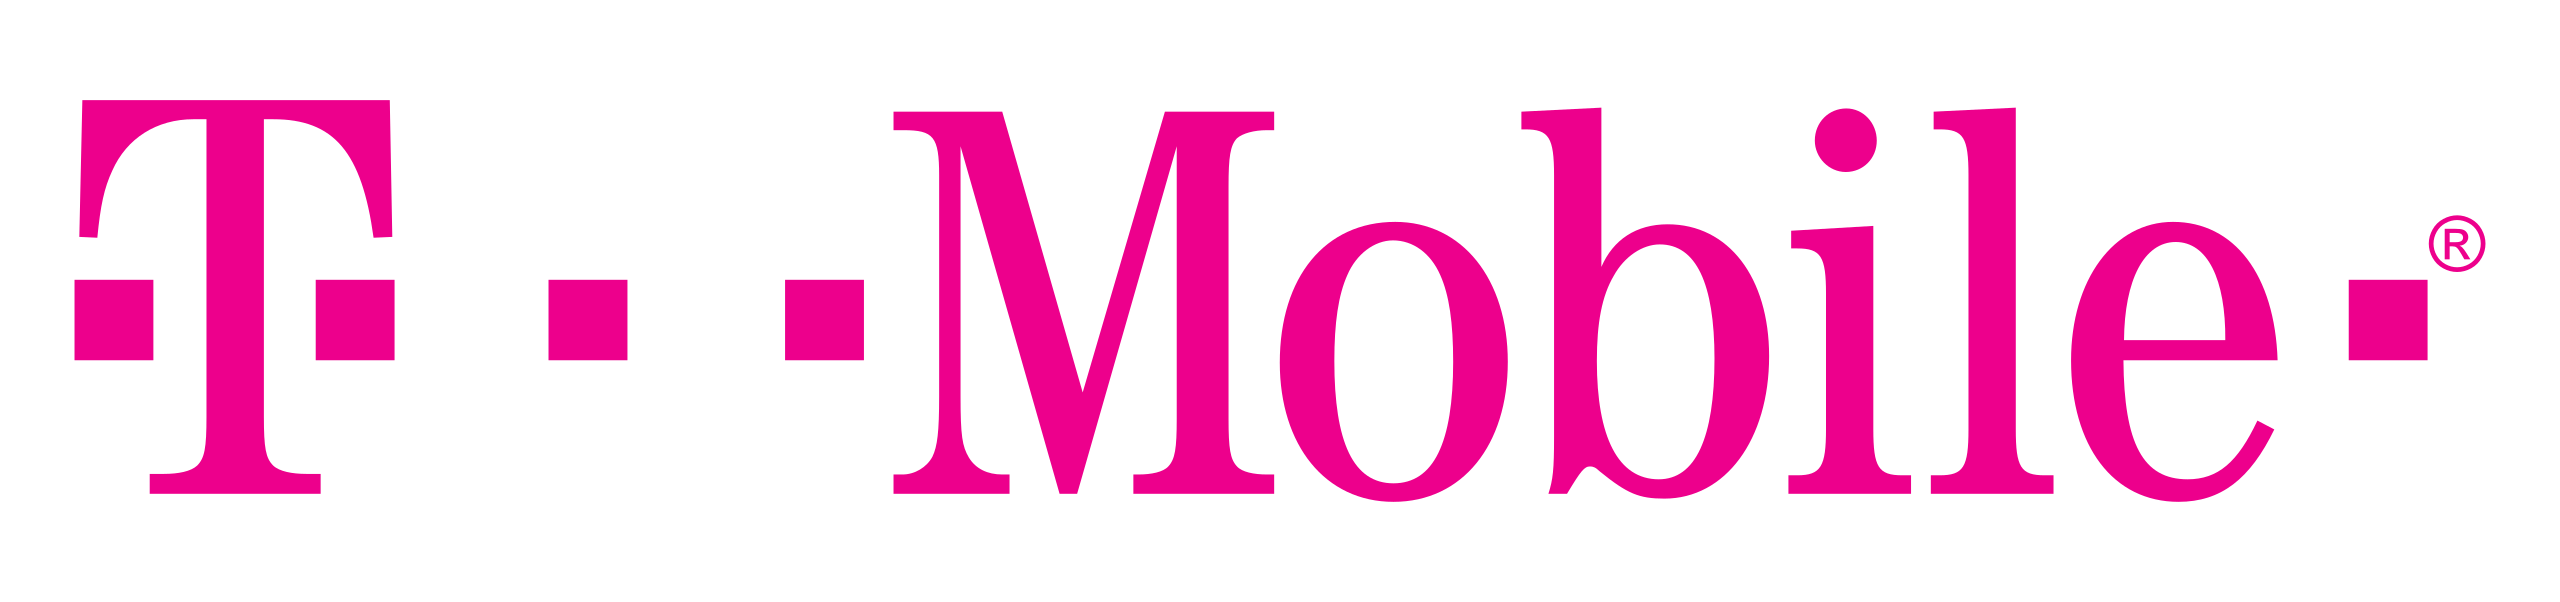 T-Mobile_logo2.svg